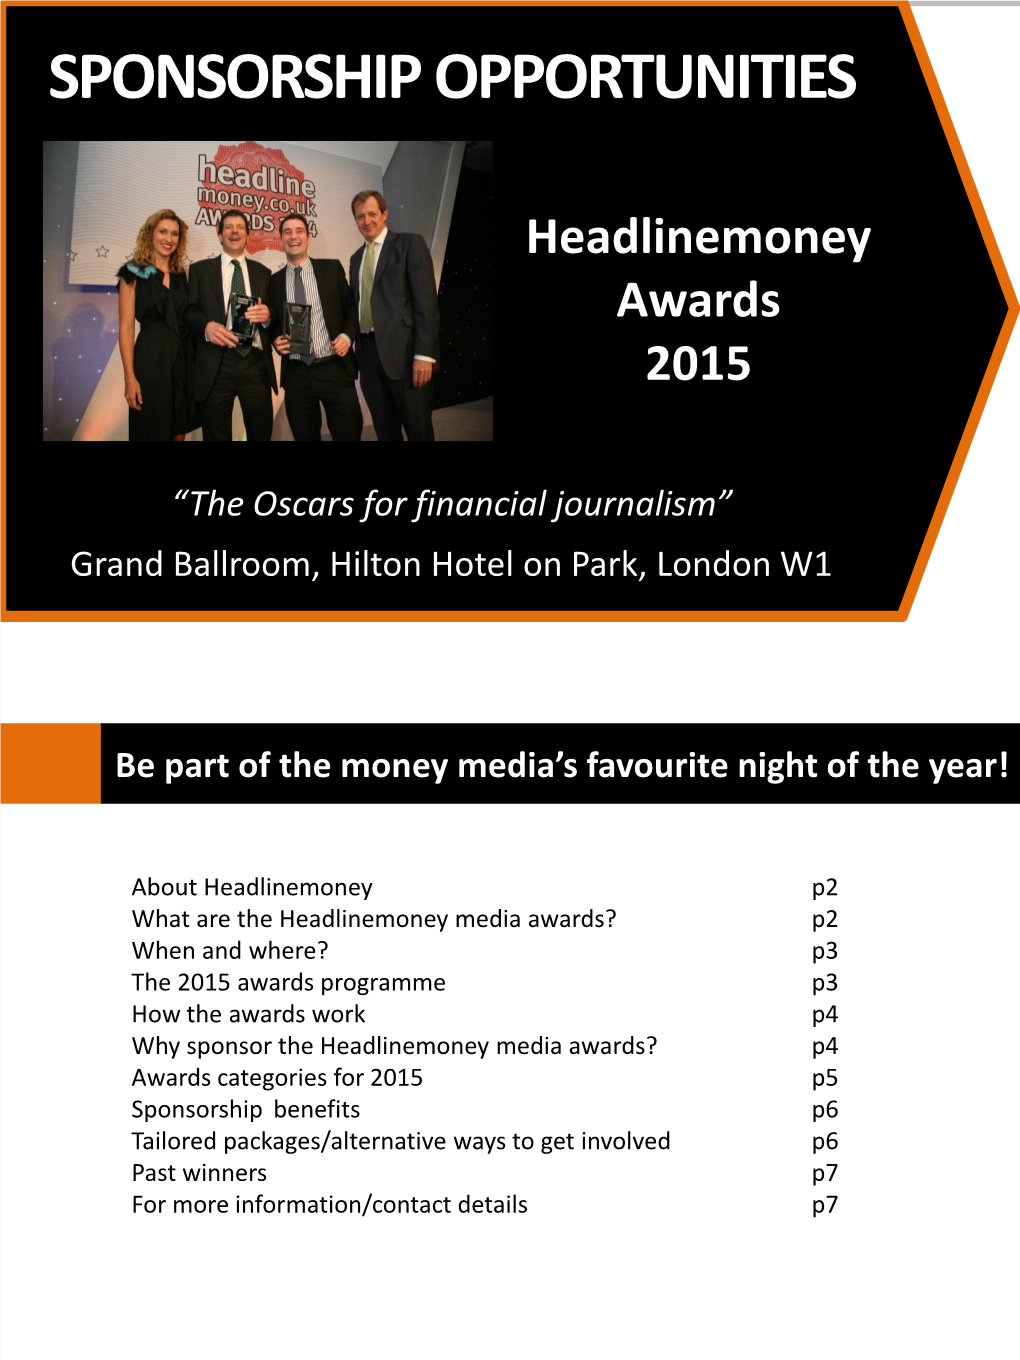 The Headlinemoney Media Awards